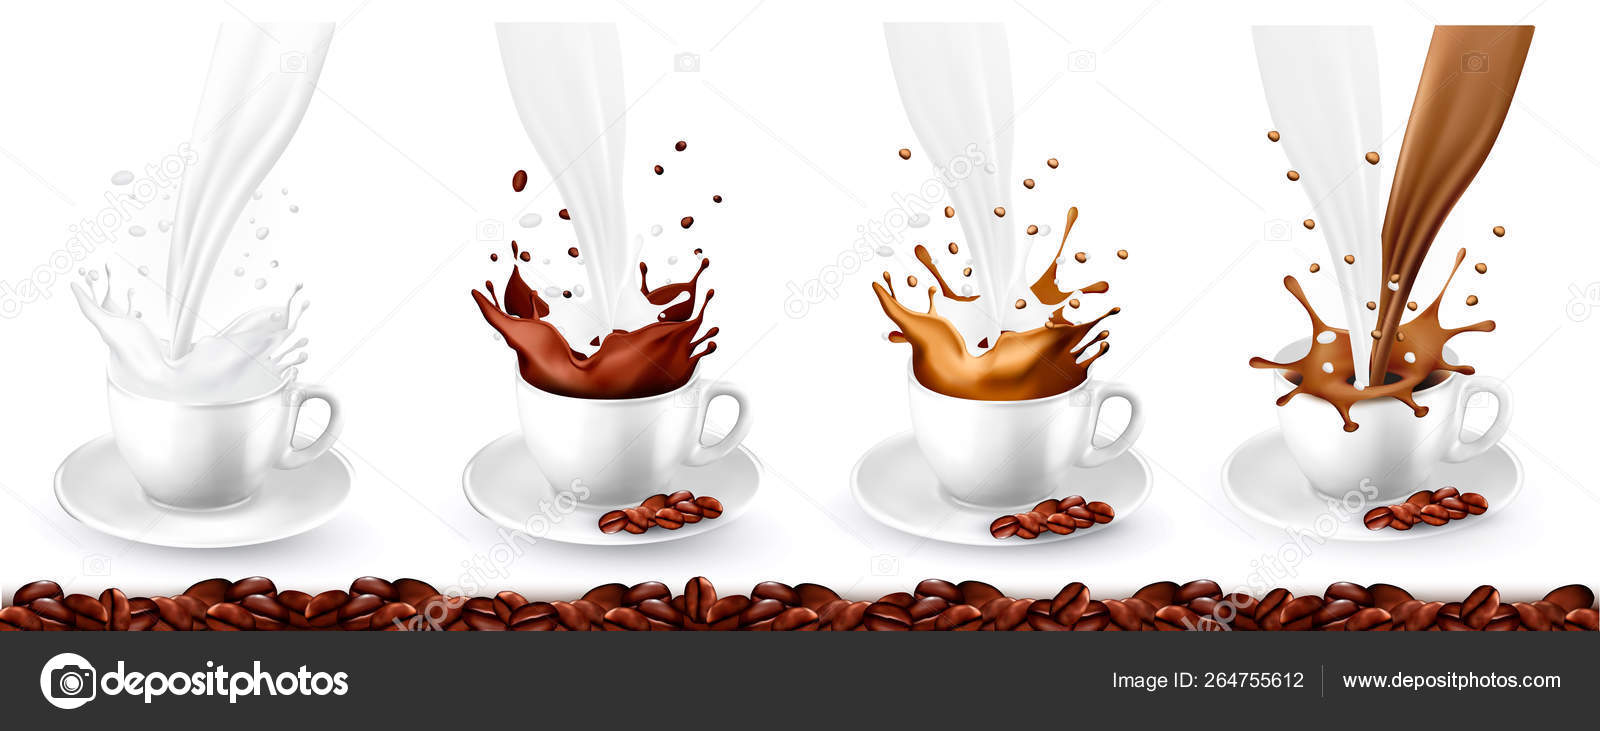 Set Of Coffee Cappuccino And Milk Splash In Cups Vector Illust Stock Vector C Almoond